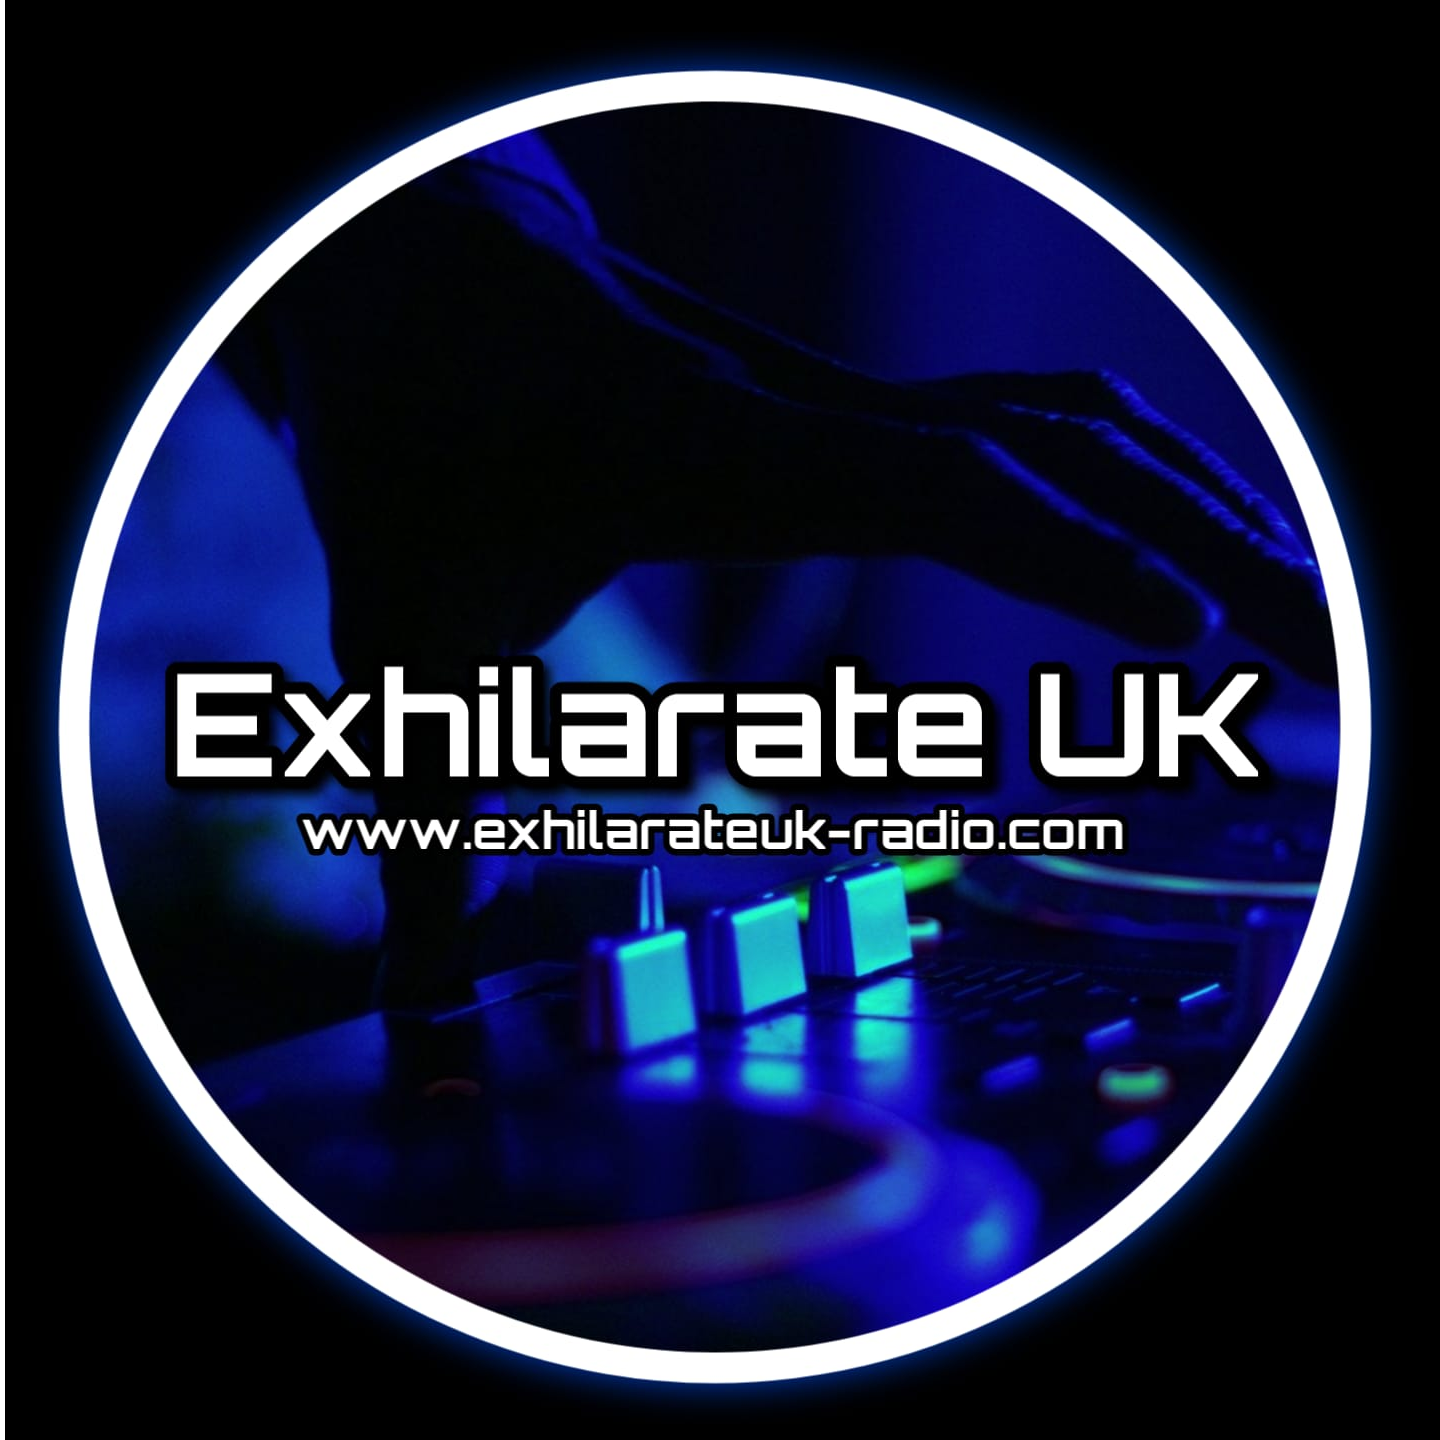 Exhilarateuk-Radio